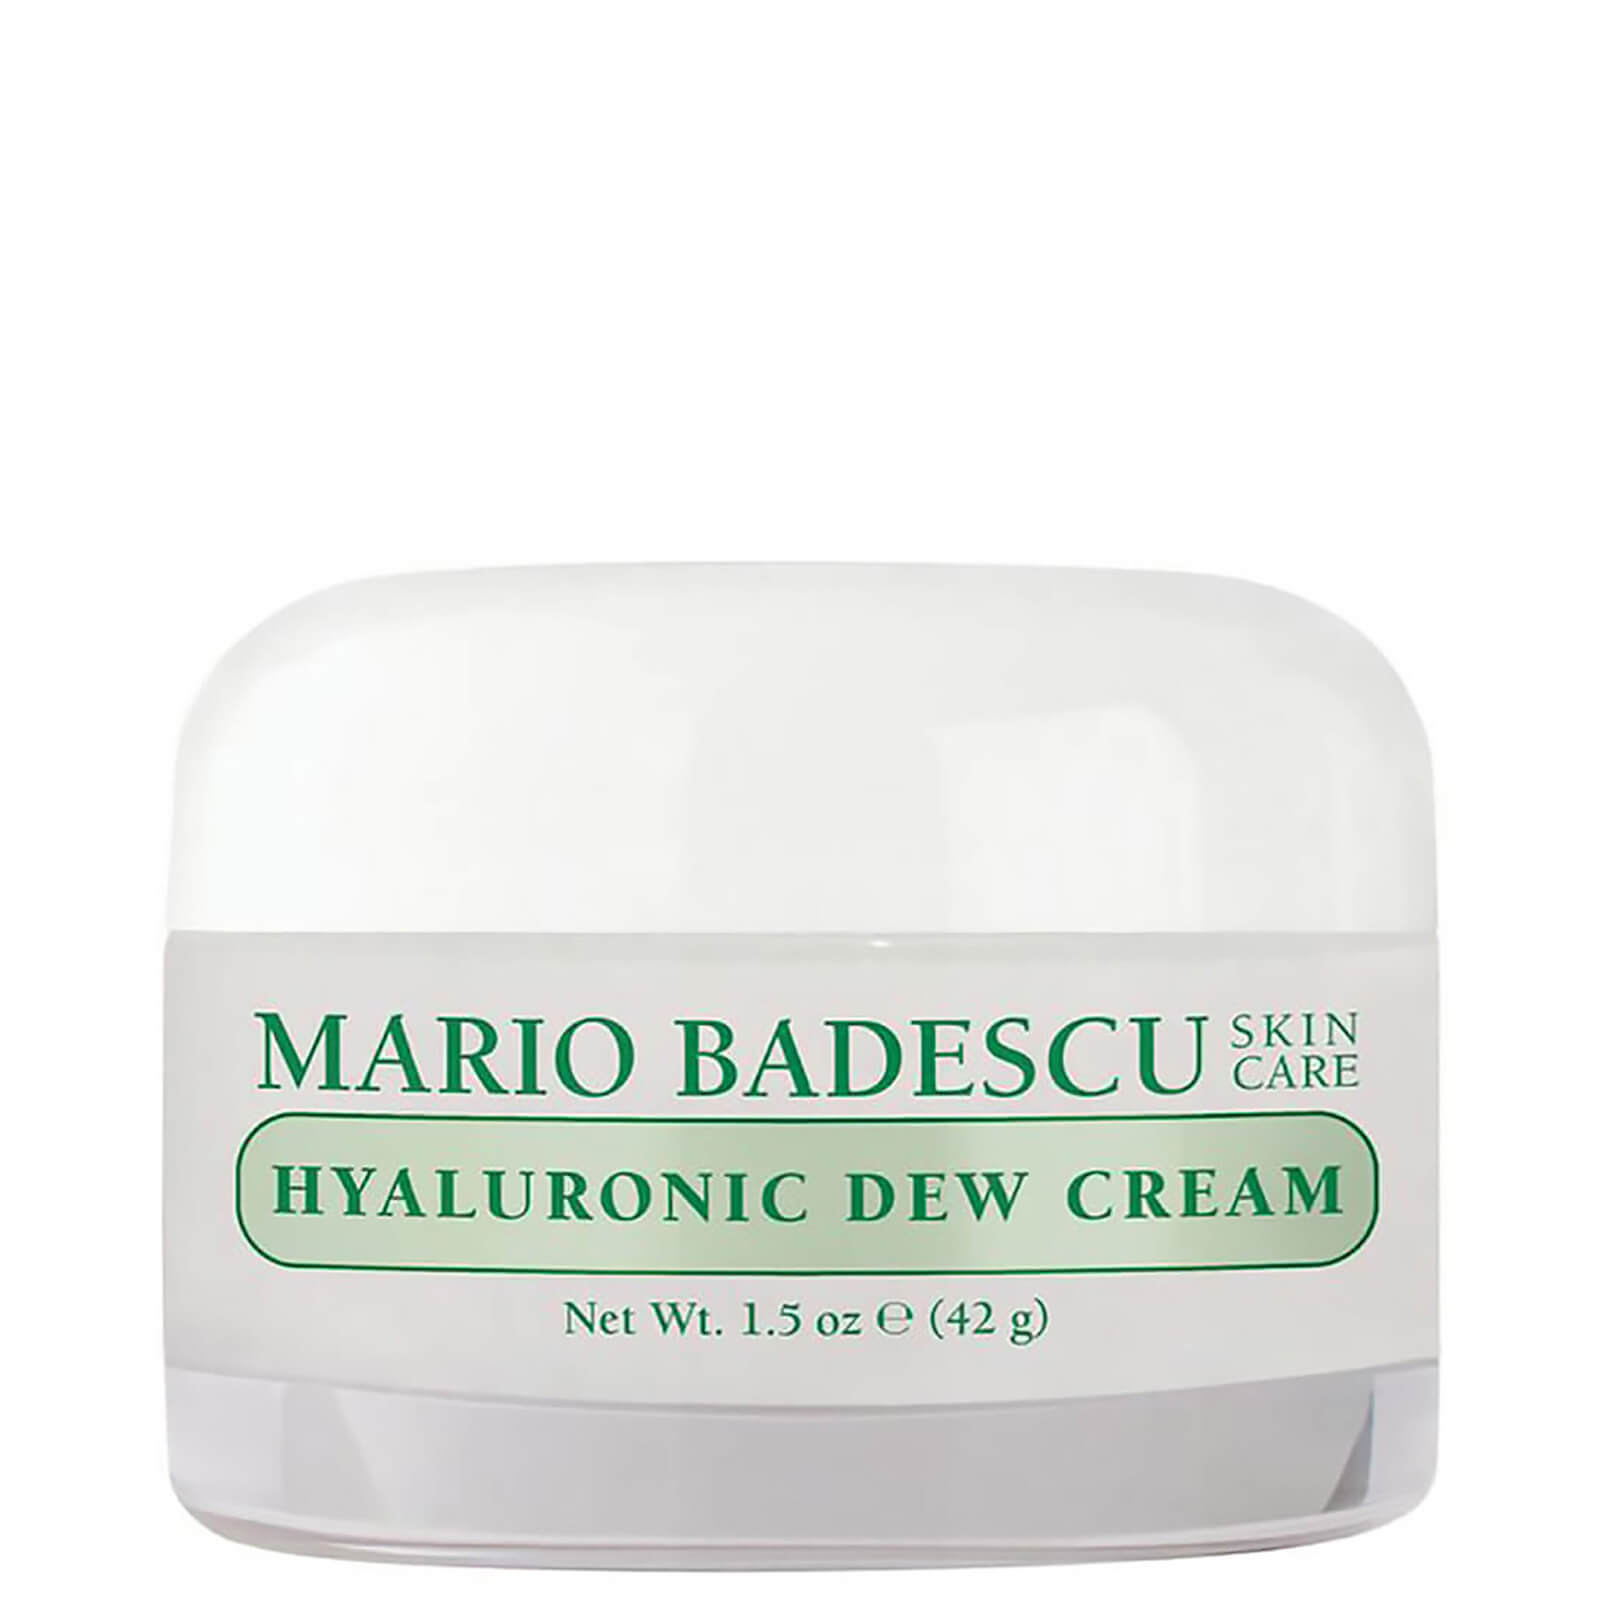 Image of Mario Badescu Hyaluronic Dew Cream